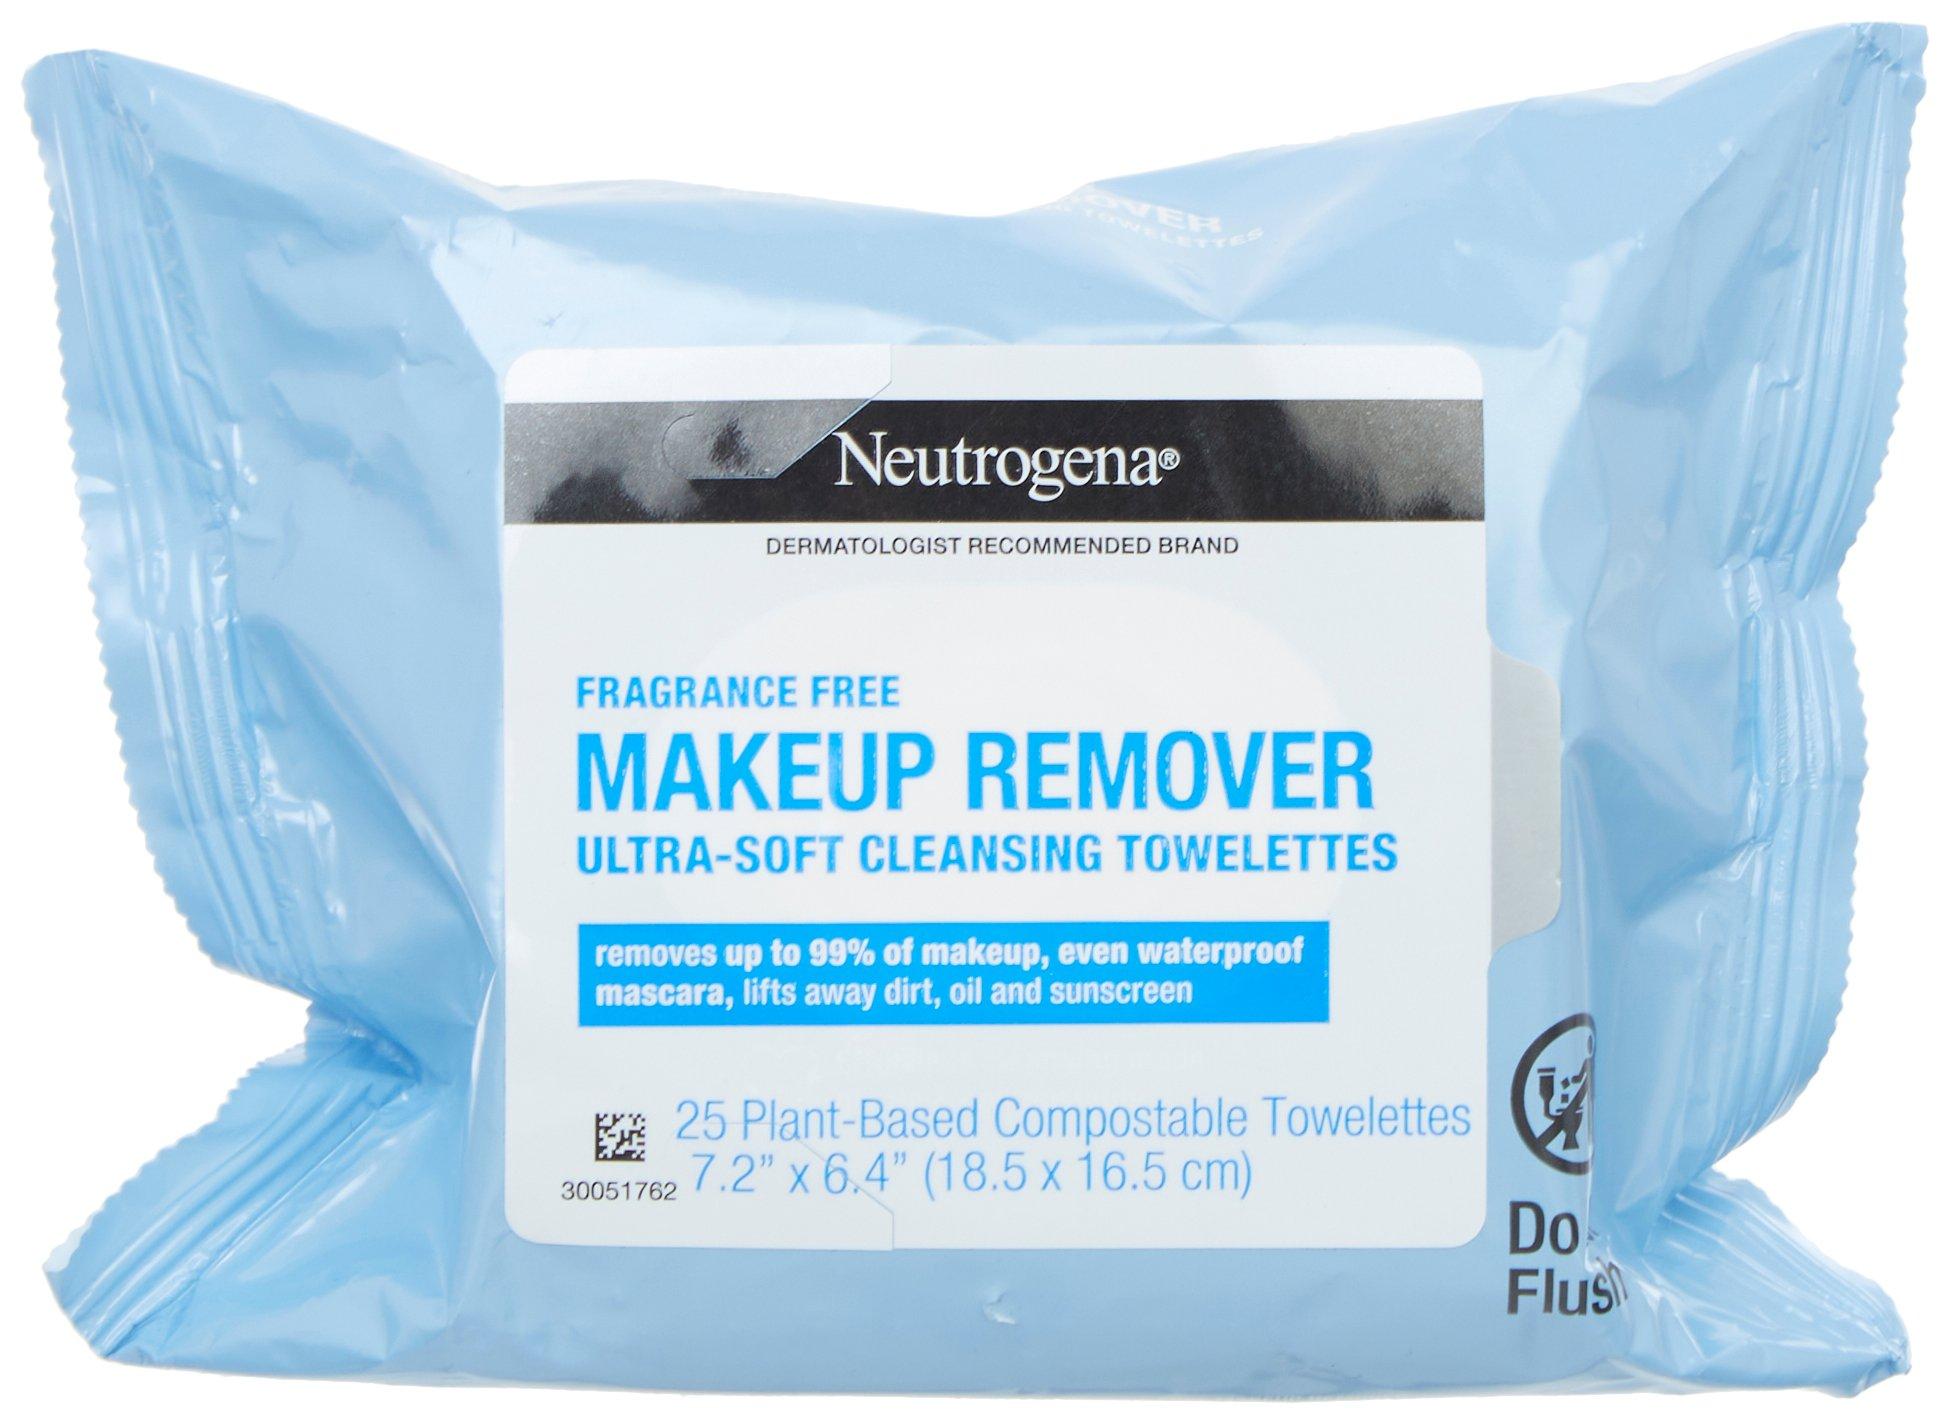 Neutrogena 25-Pk. Fragrance Free Cleansing Towelettes